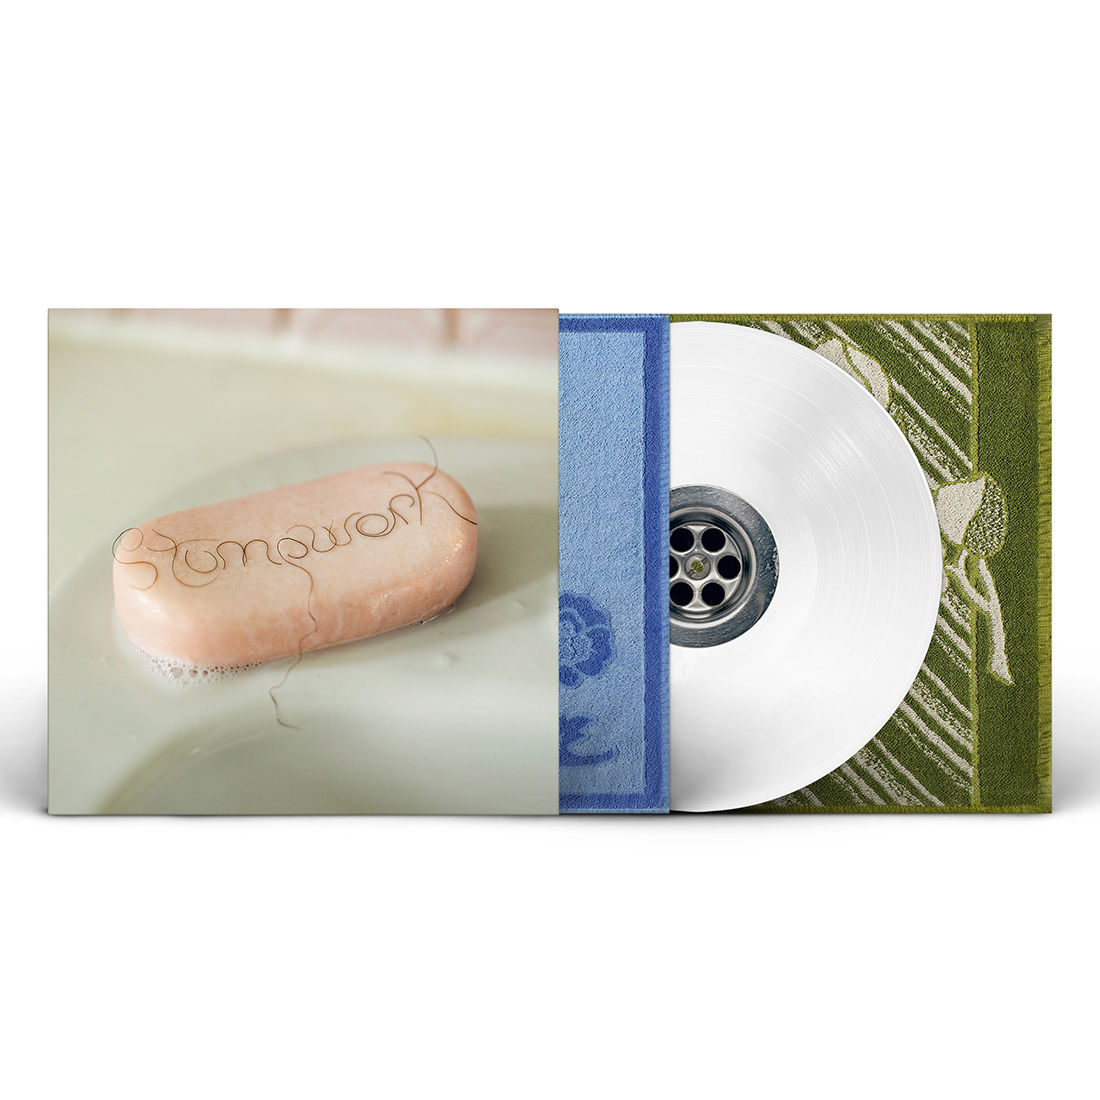 Stumpwork: Limited White Vinyl LP + Exclusive Signed Print